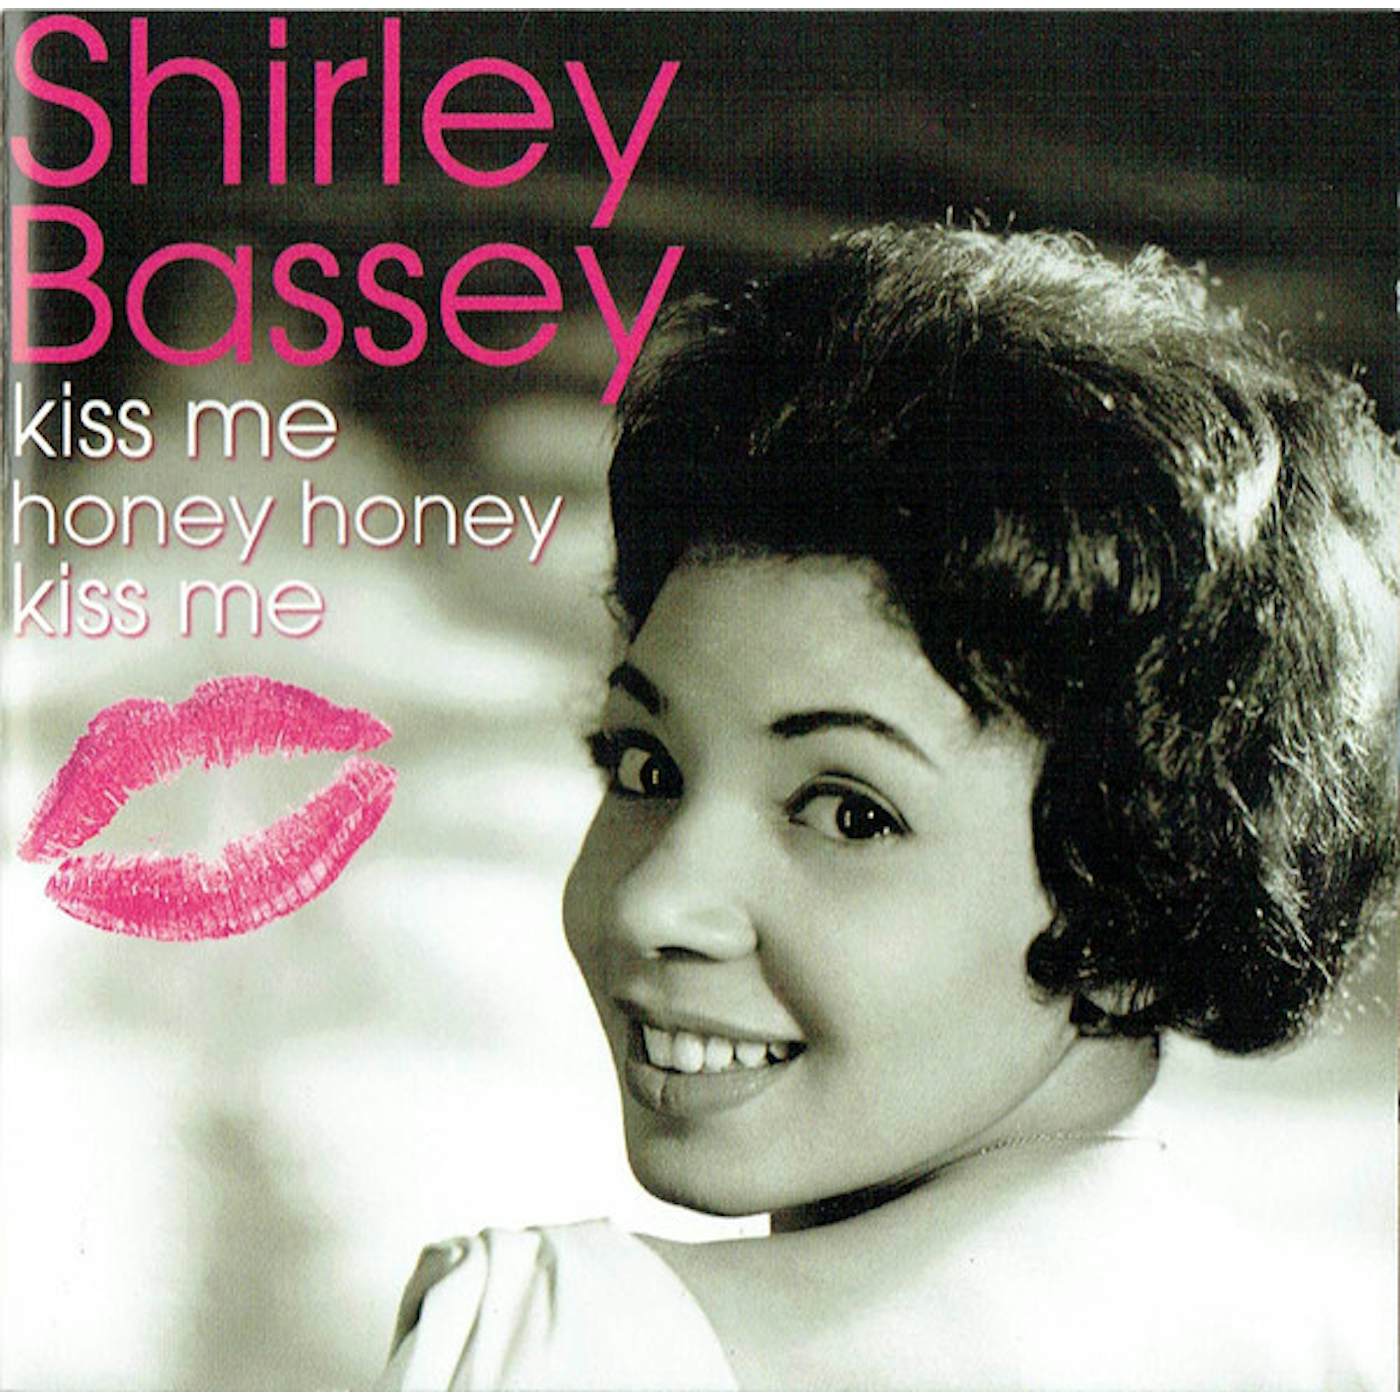 Shirley Bassey KISS ME HONEY HONEY KISS ME Vinyl Record